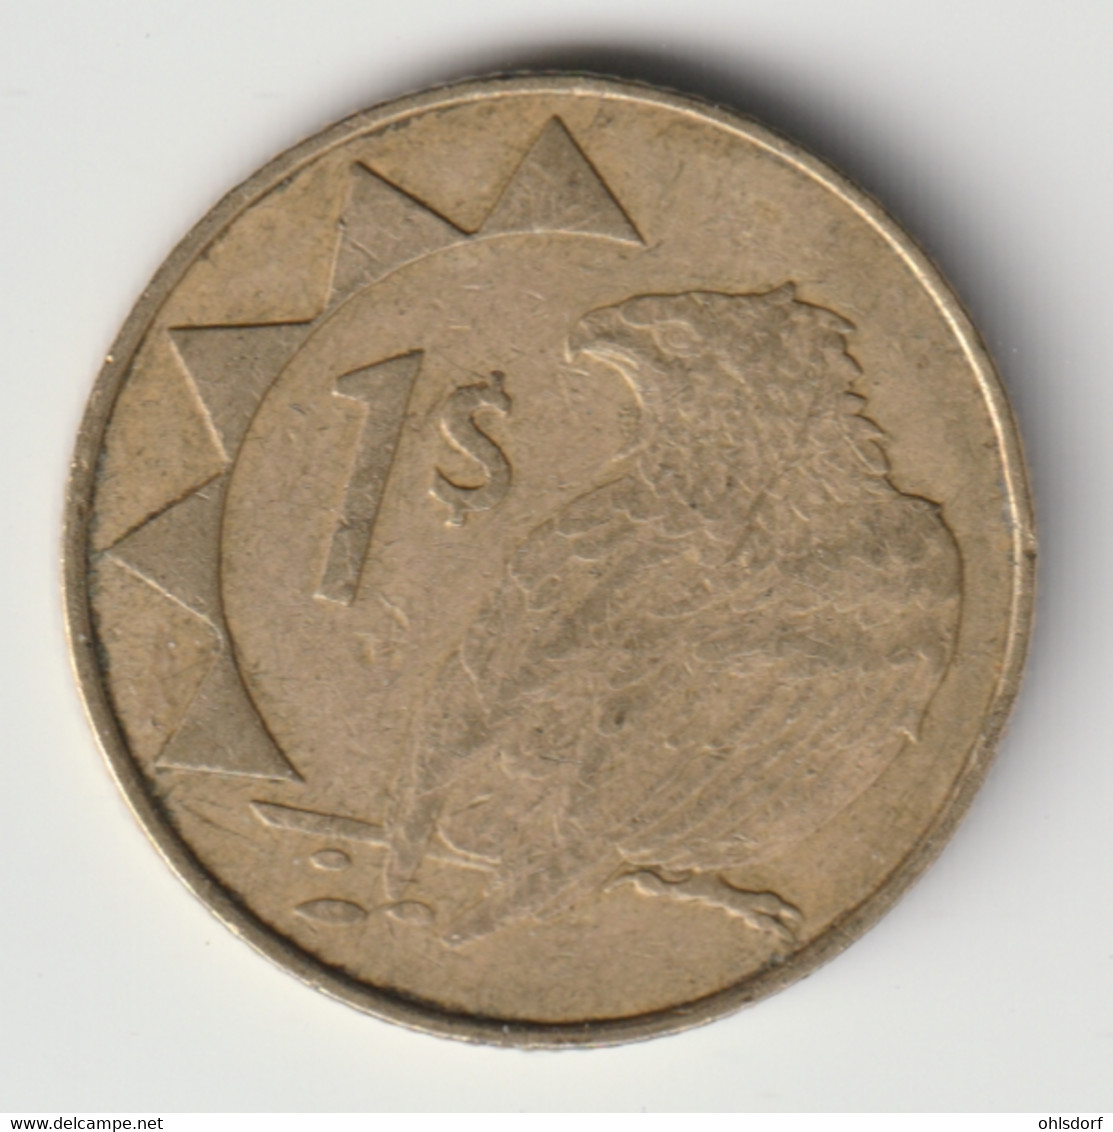 NAMIBIA 1993: 1 Dollar, KM 4 - Namibia